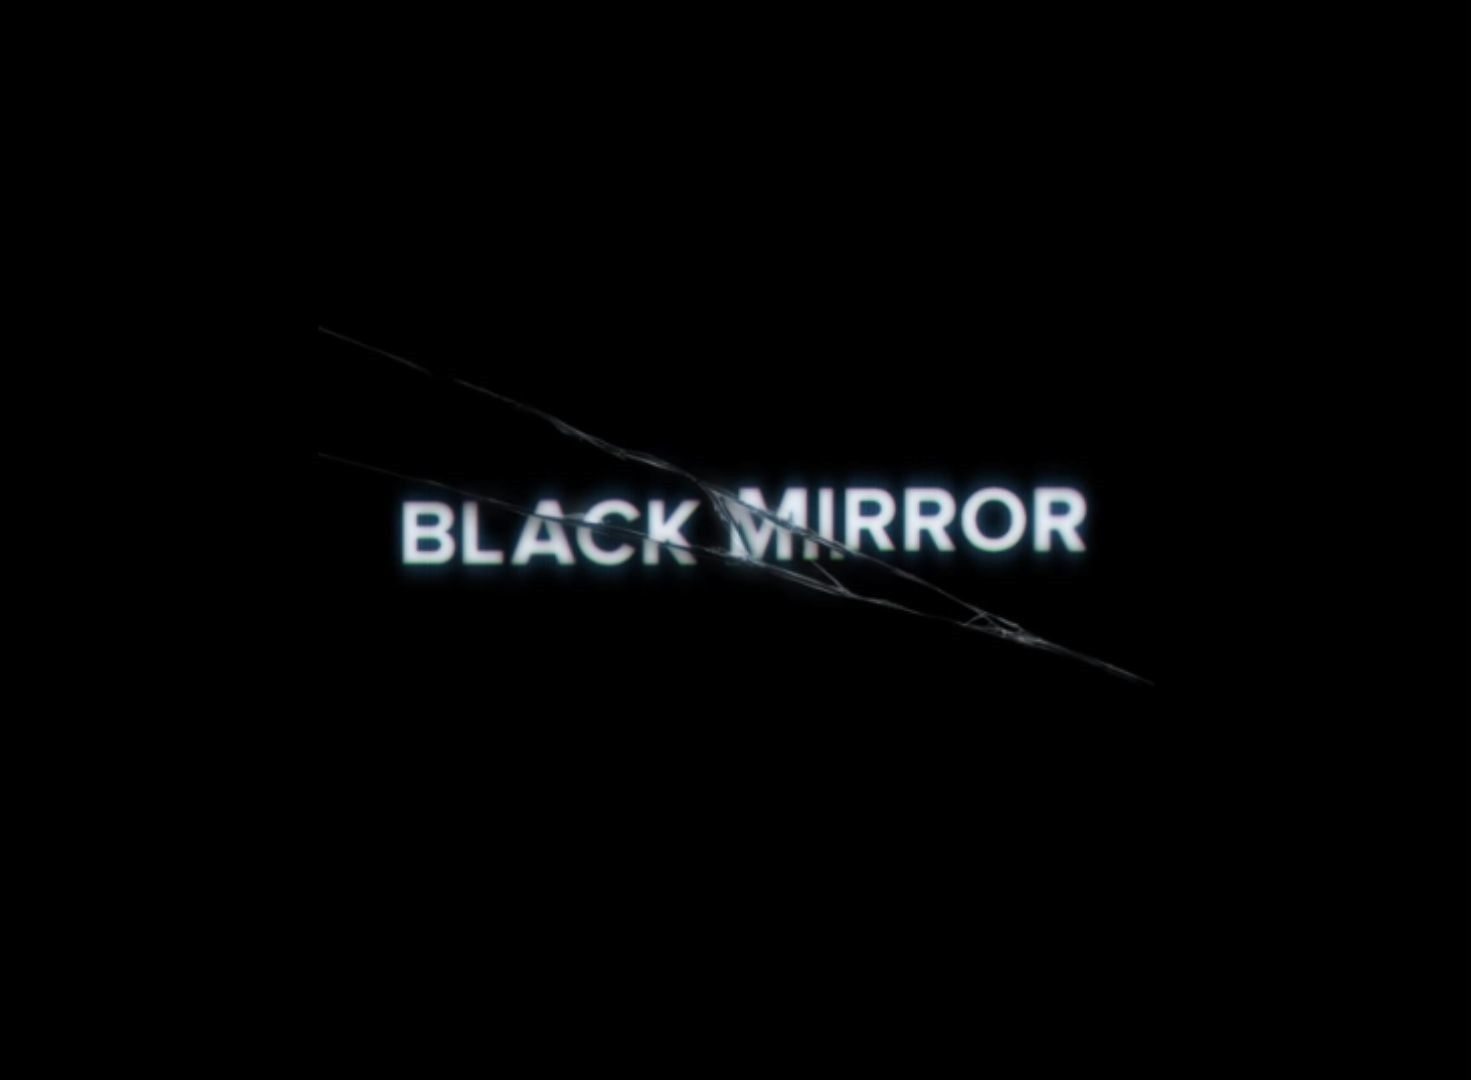 'Black Mirror' confirmed to return on Netflix with sixth season